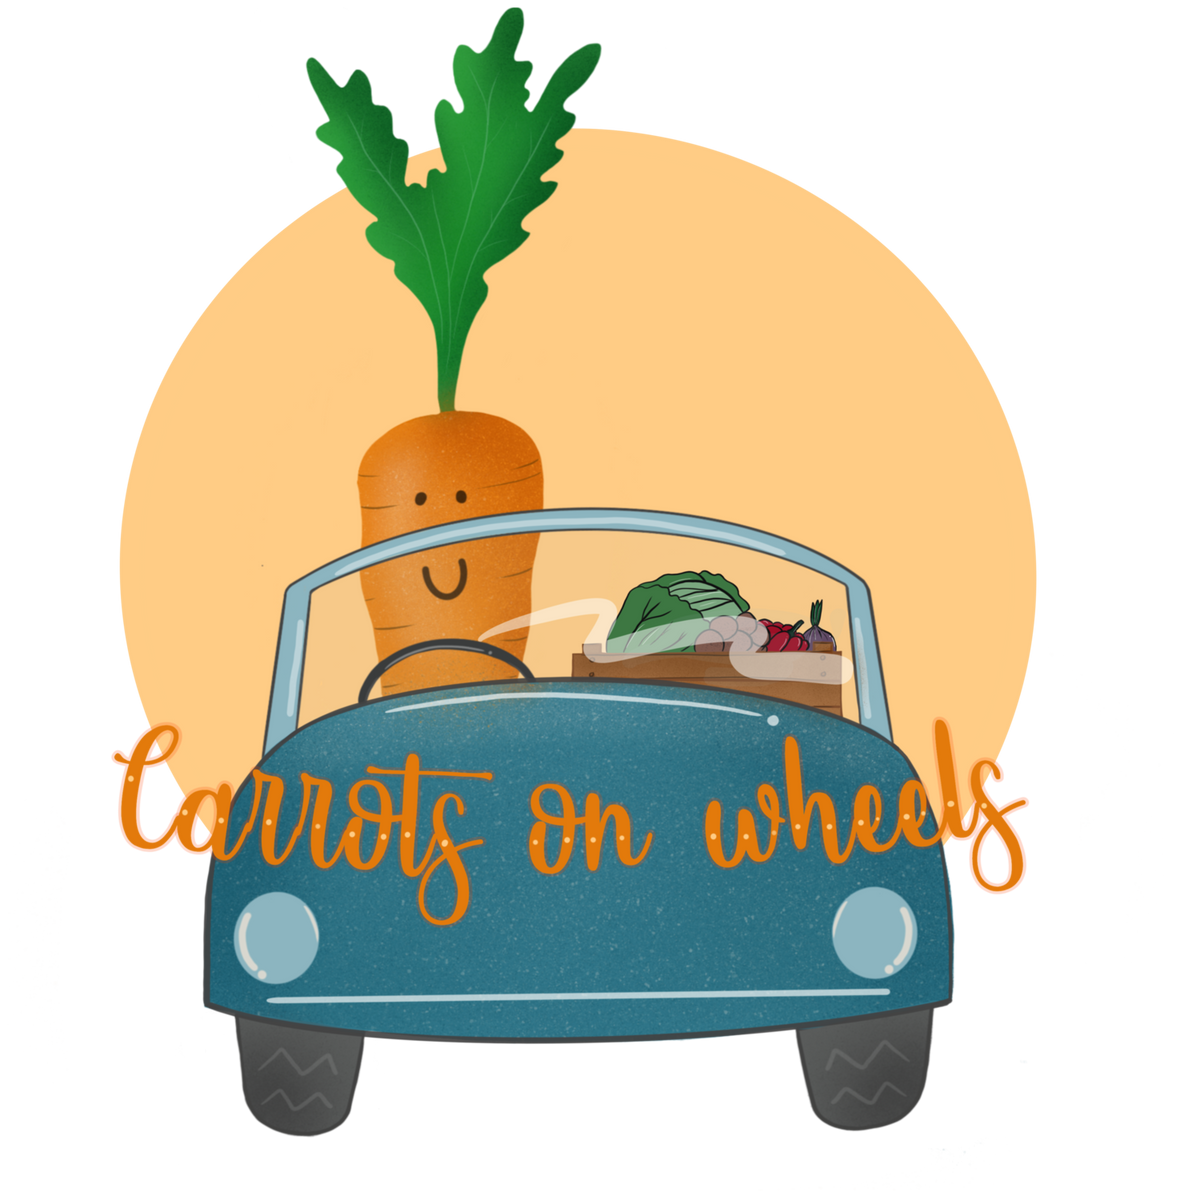 Carrots On Wheels